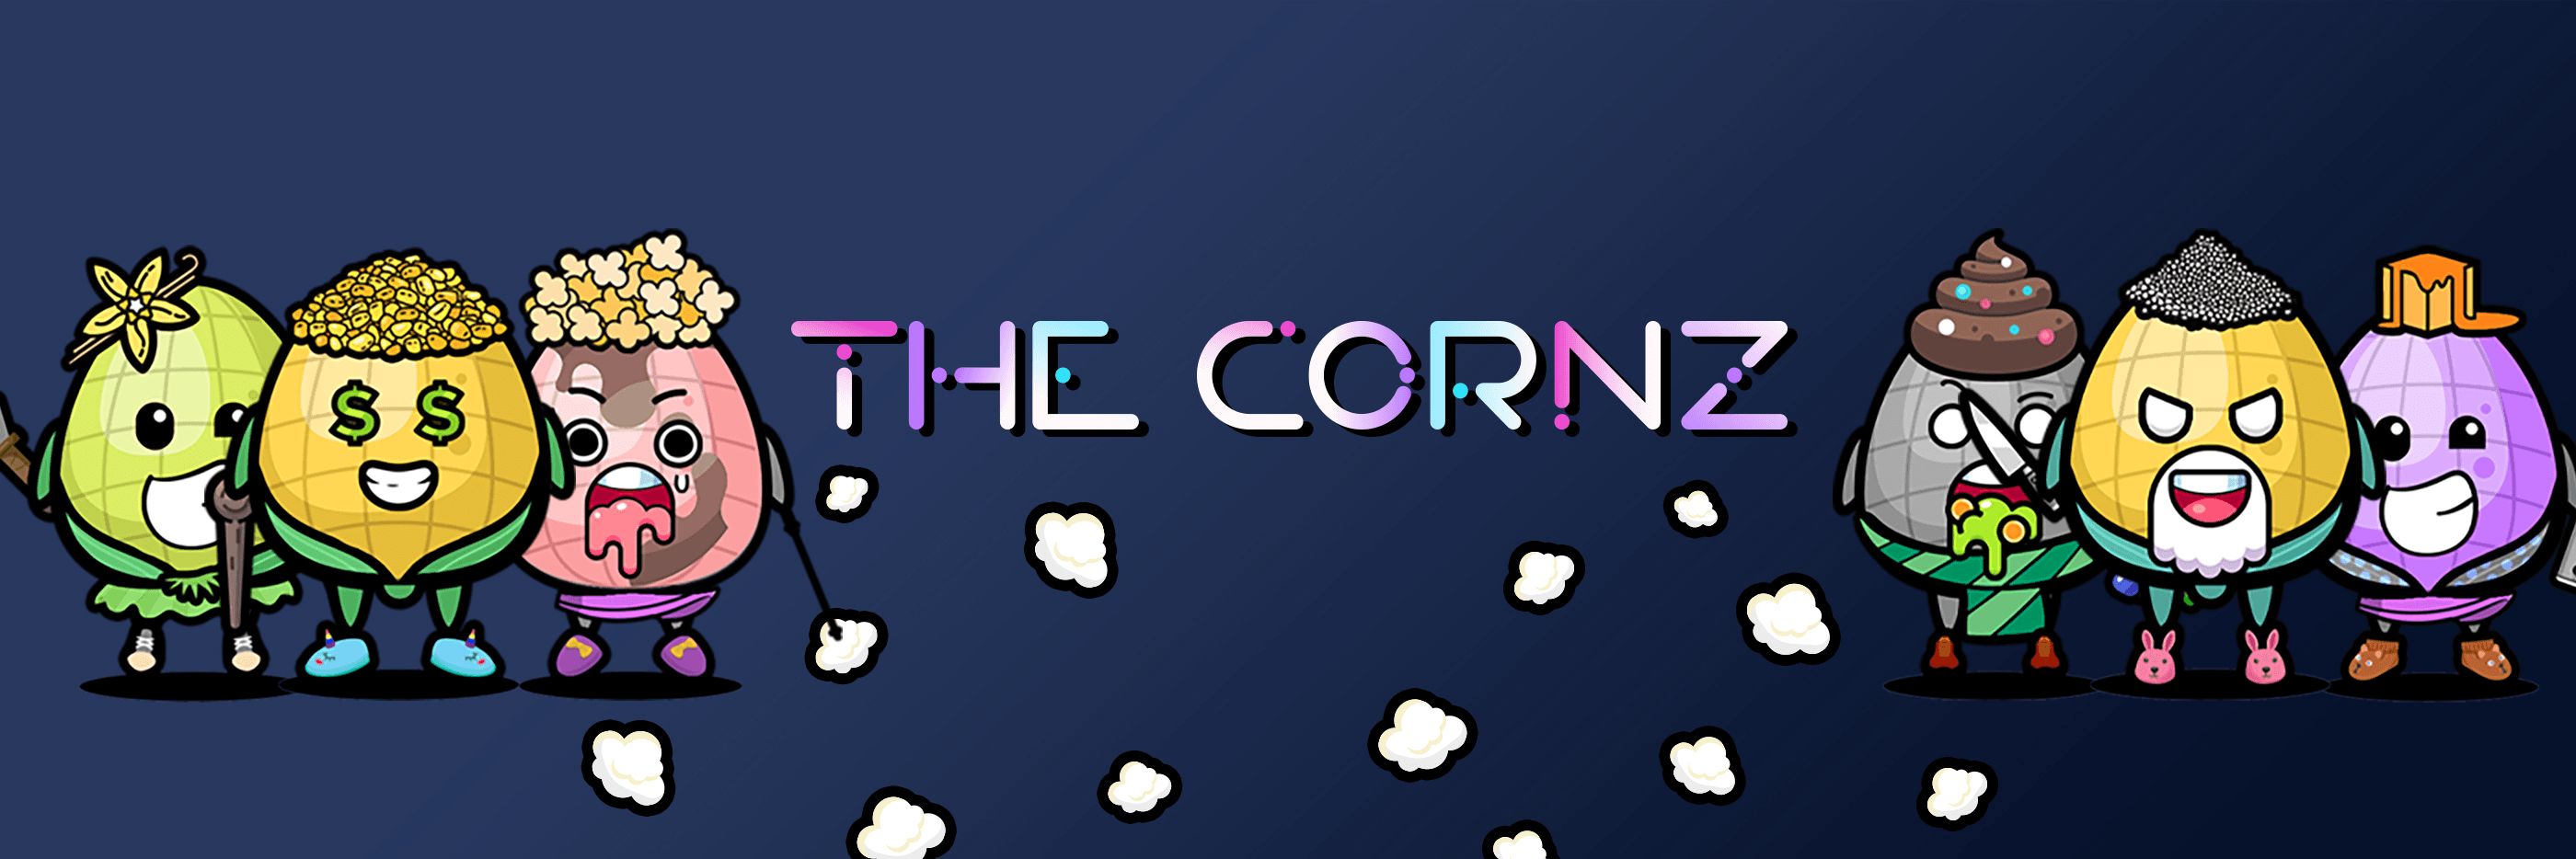 The_Corn 横幅